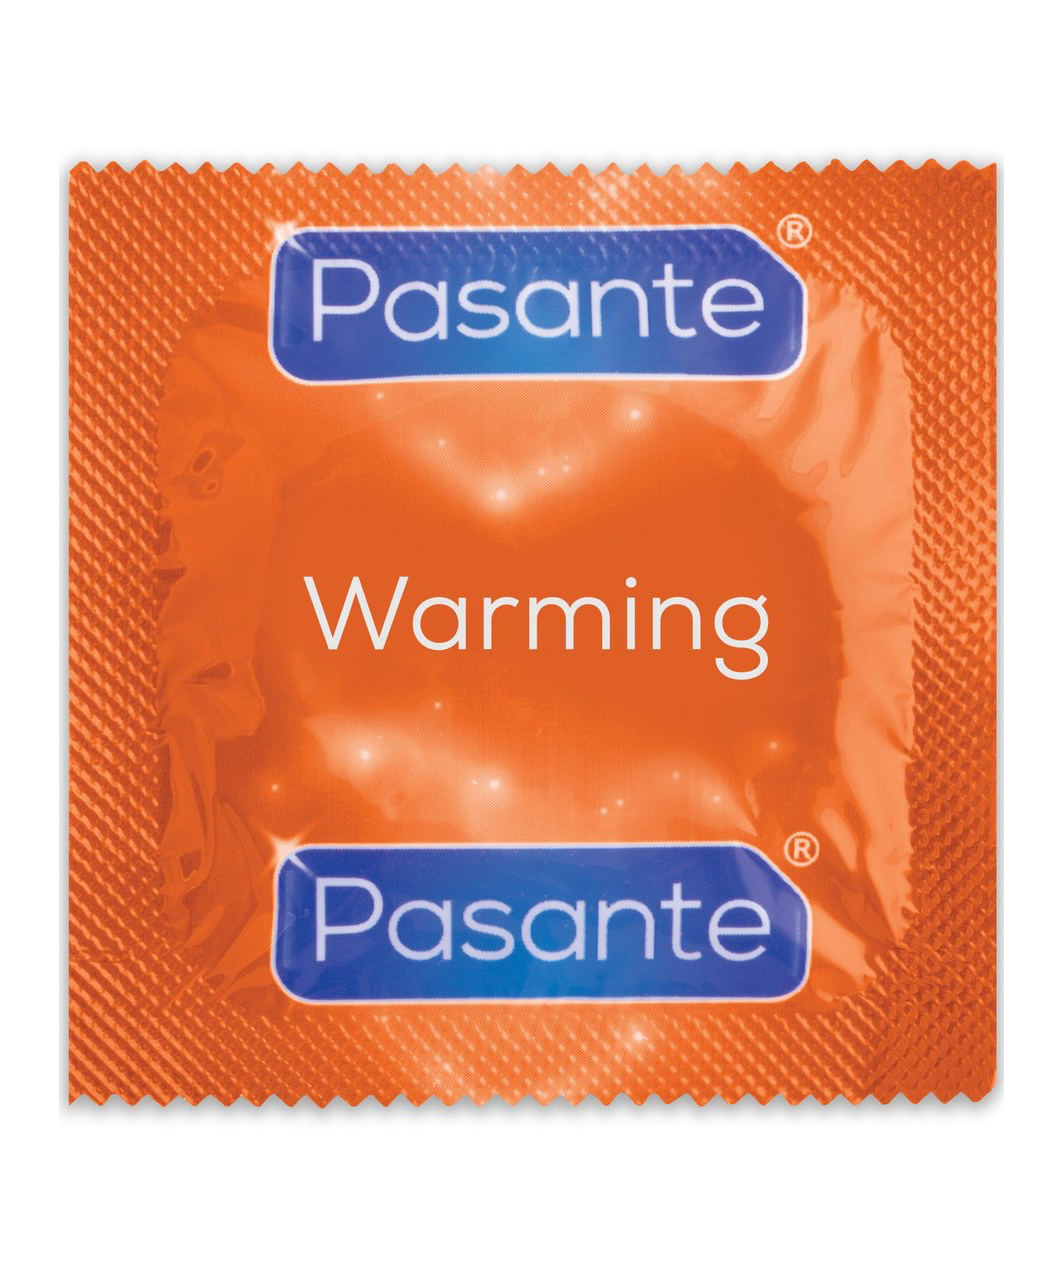 Pasante Climax презервативы (12 шт.)